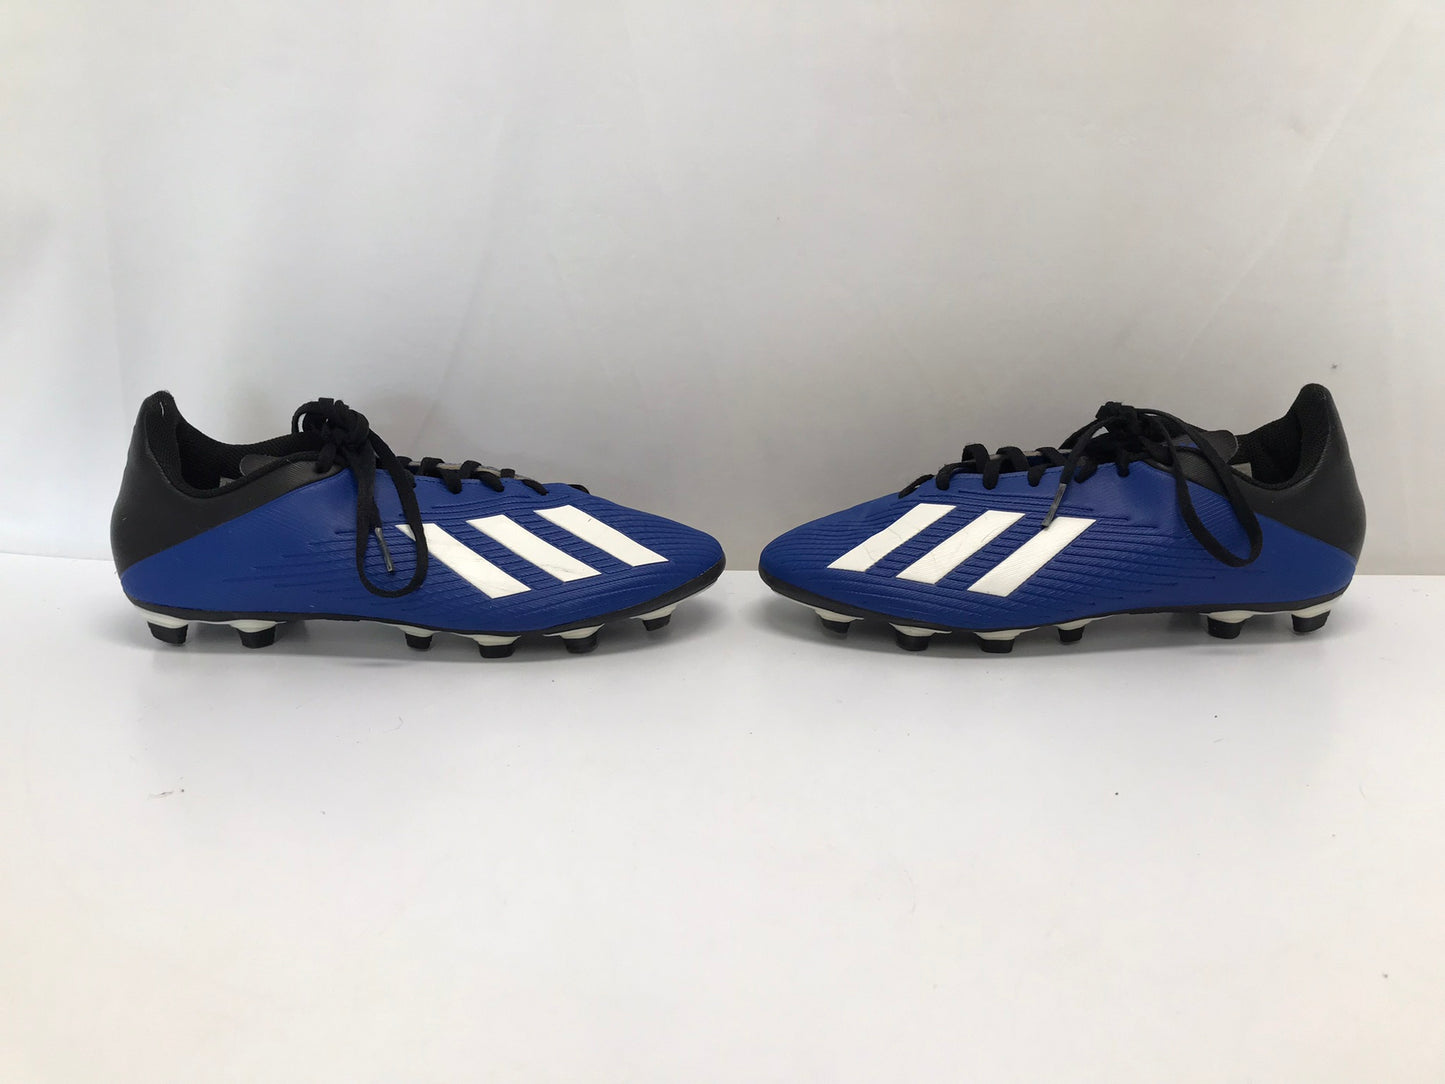 Soccer Shoes Cleats Men's Size 8 Adidas Black Blue New Demo Model